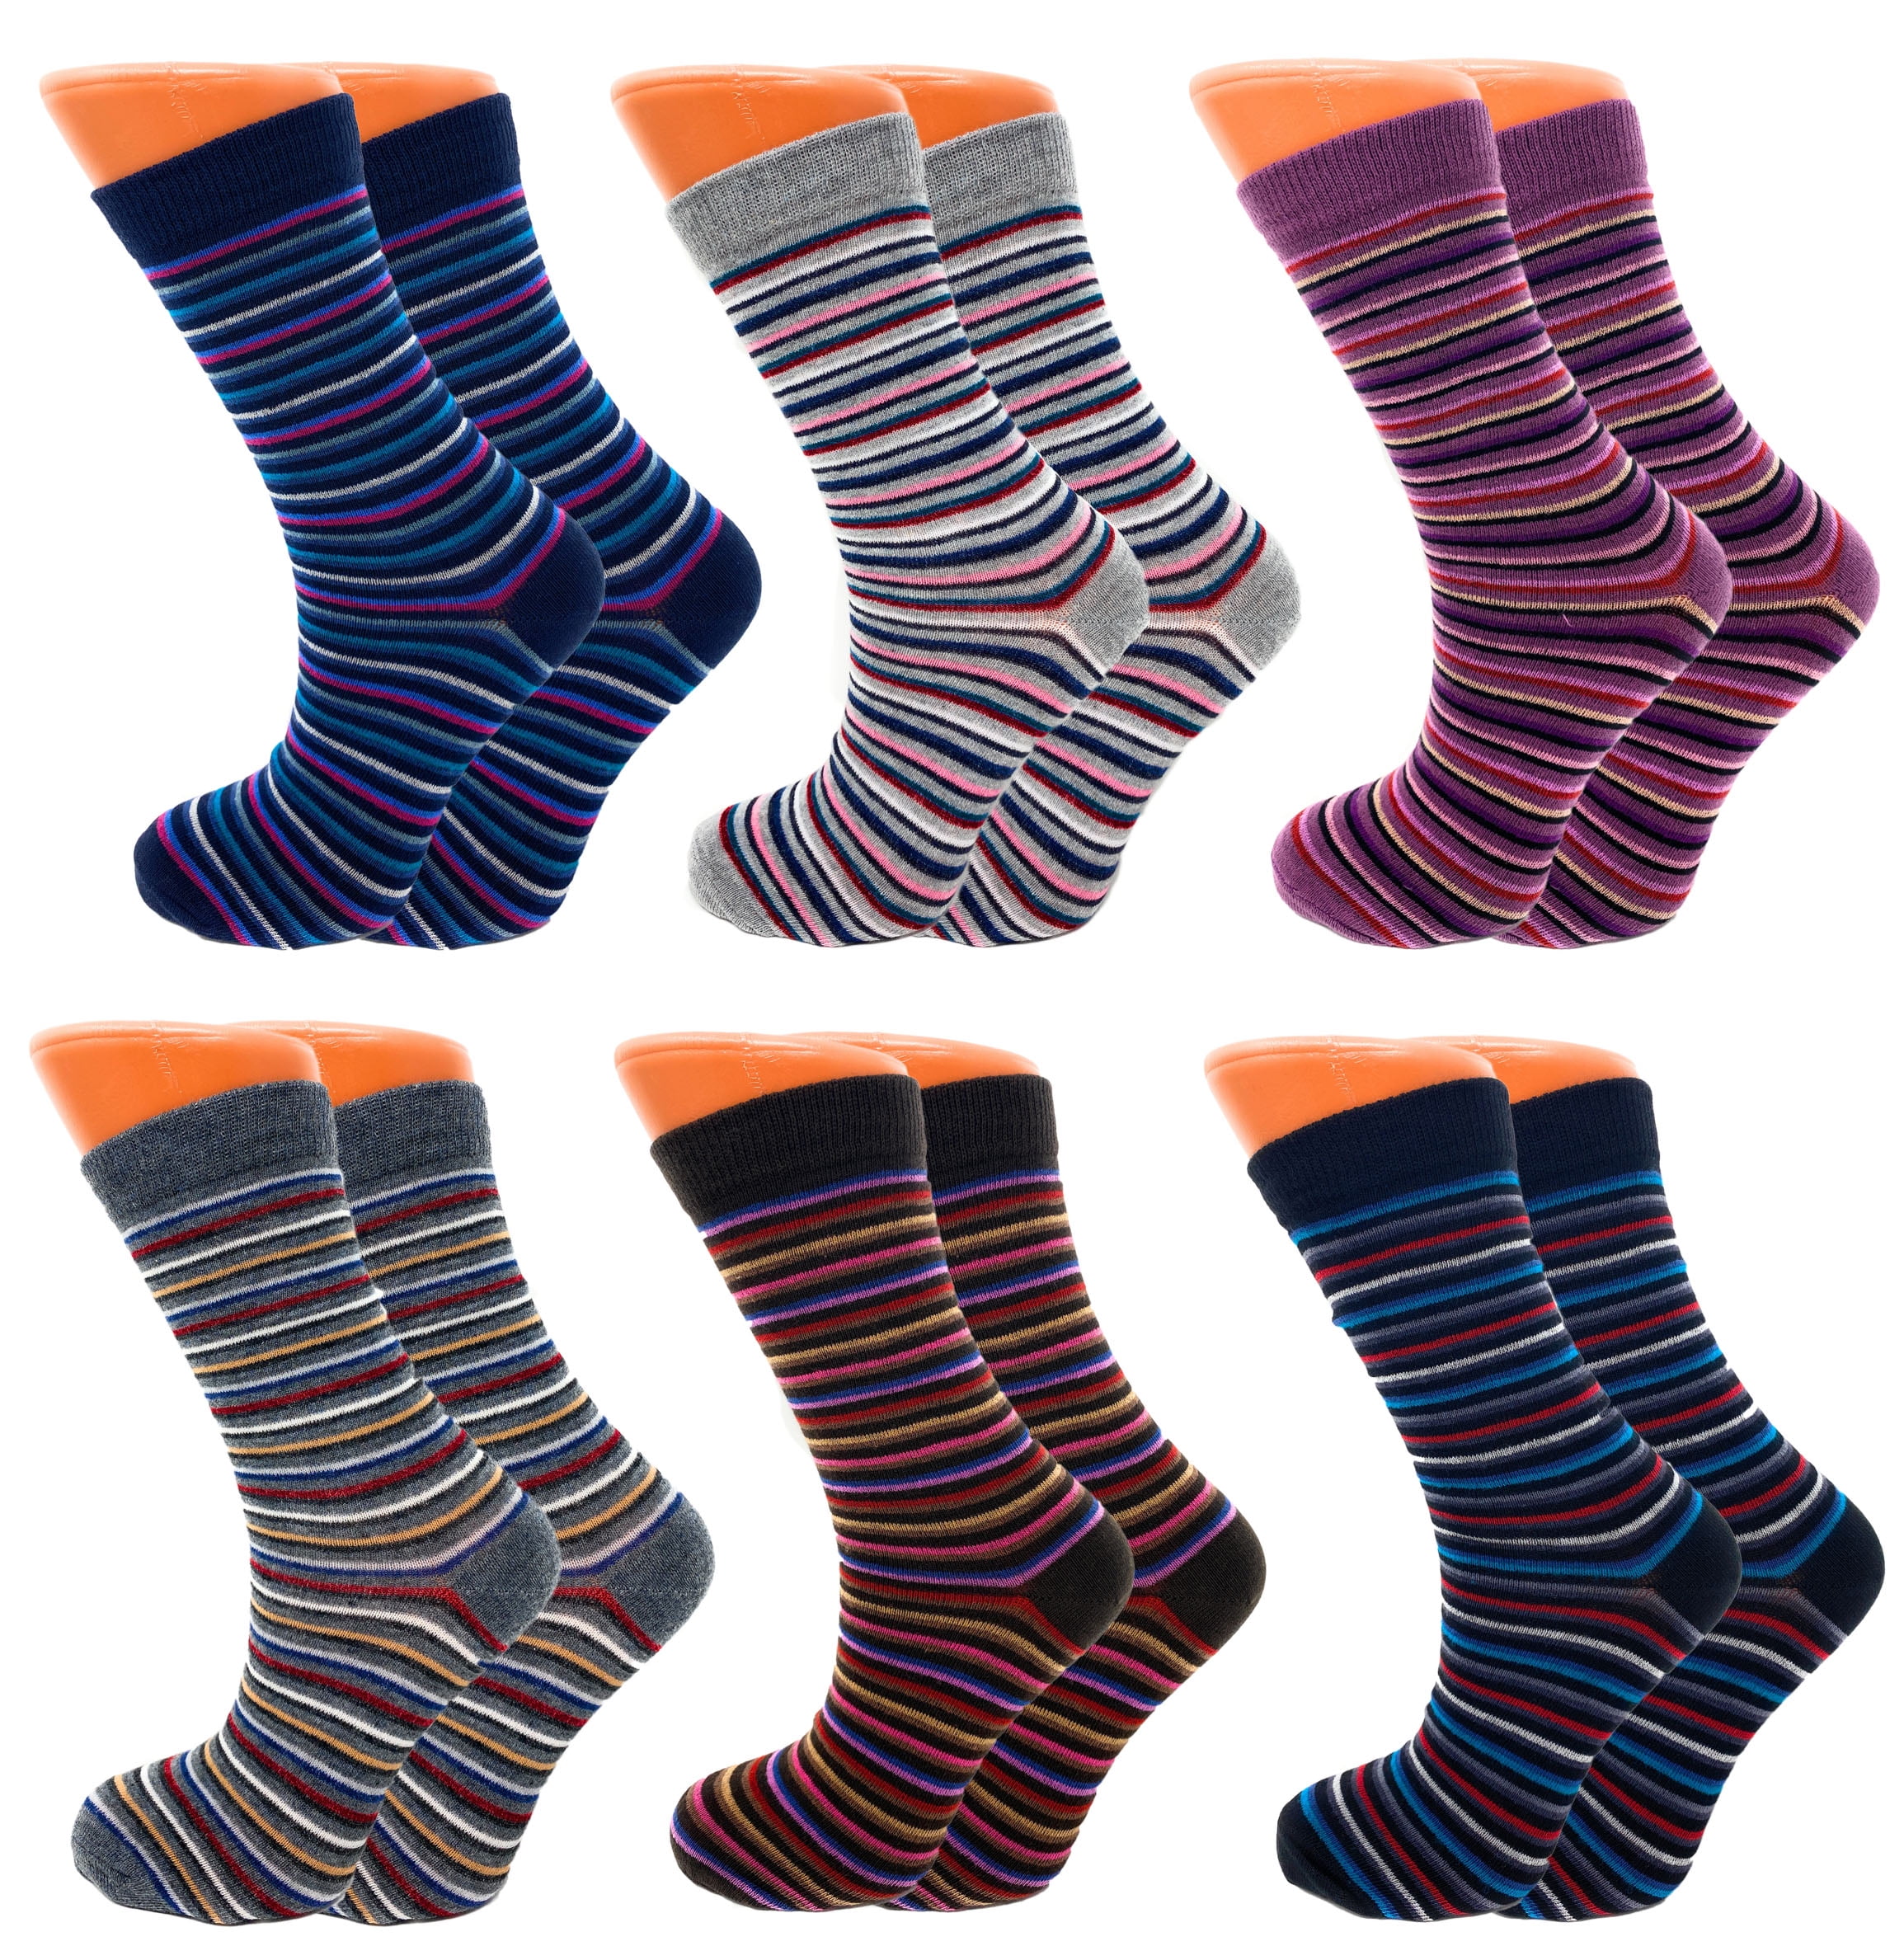 5 Pairs Mixed colors boys retro combed cotton socks 